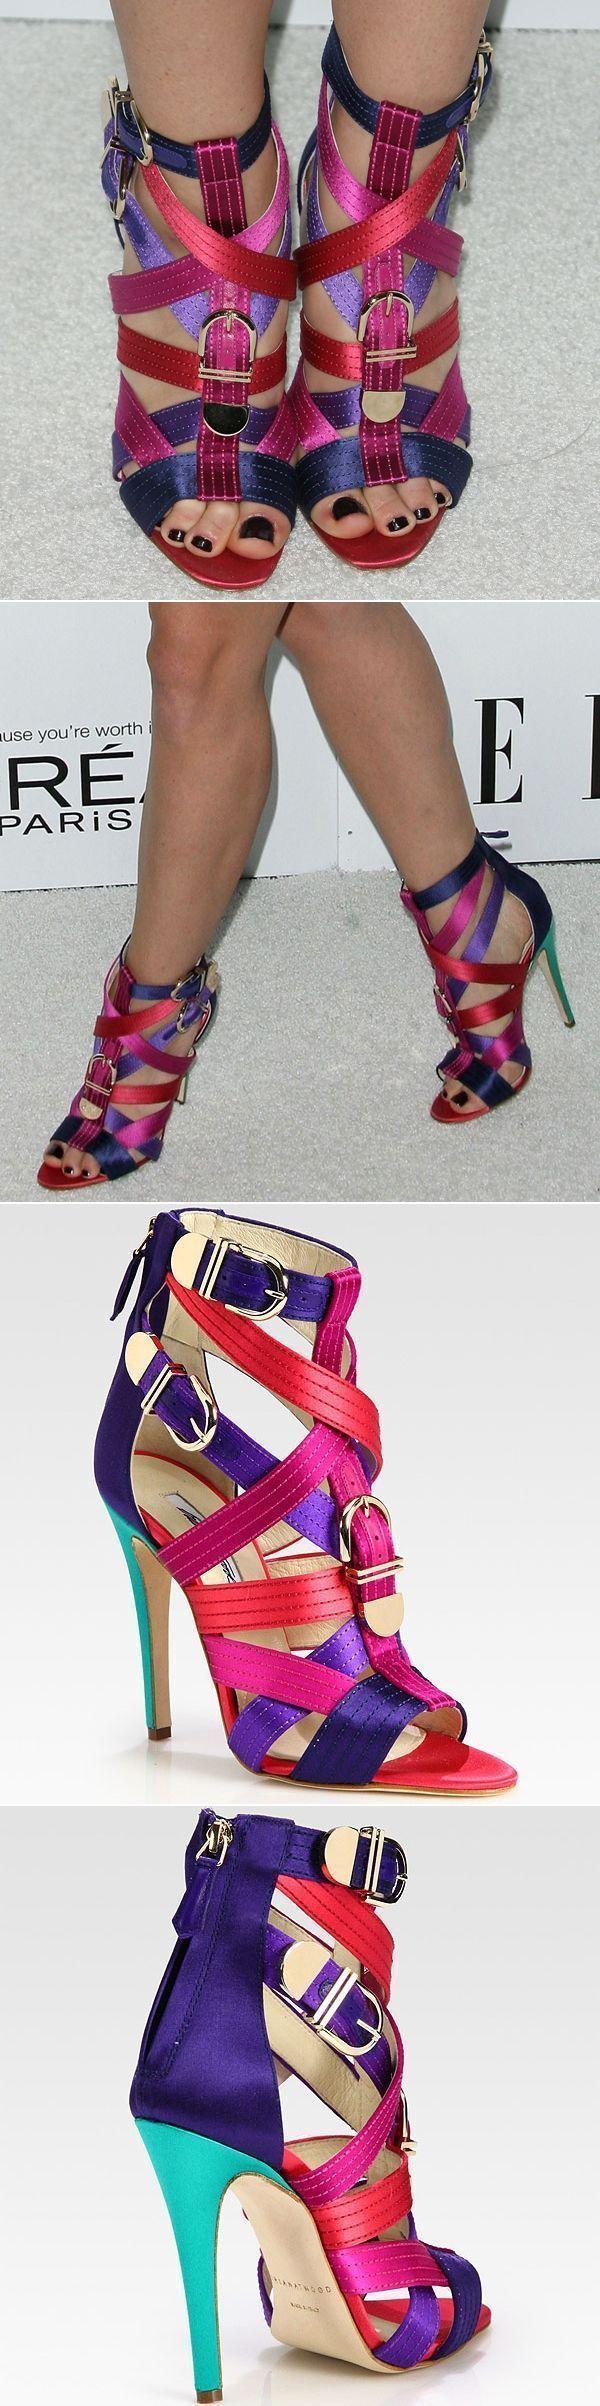 Hochzeit - Jayma Mays Rocking Brian Atwood ‘Encanta’ Buckled Multicolored Strappy Satin Sandals #brianatwoodheelsstyle #brianatwoodheelsstrappysandals 